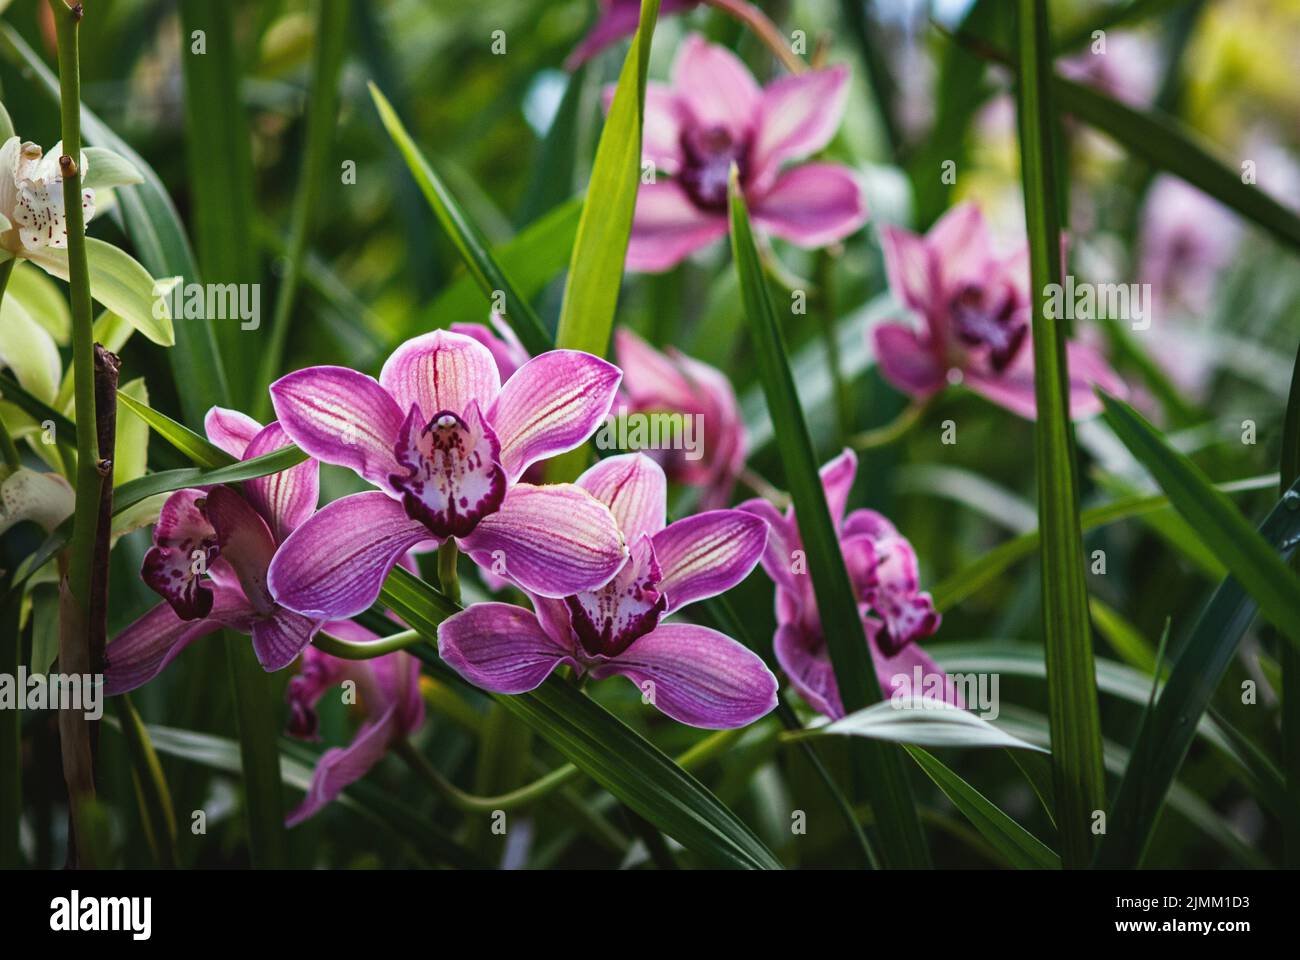 Cymbidium devonianum - purple boat orchids blooming in greenhouse Stock Photo